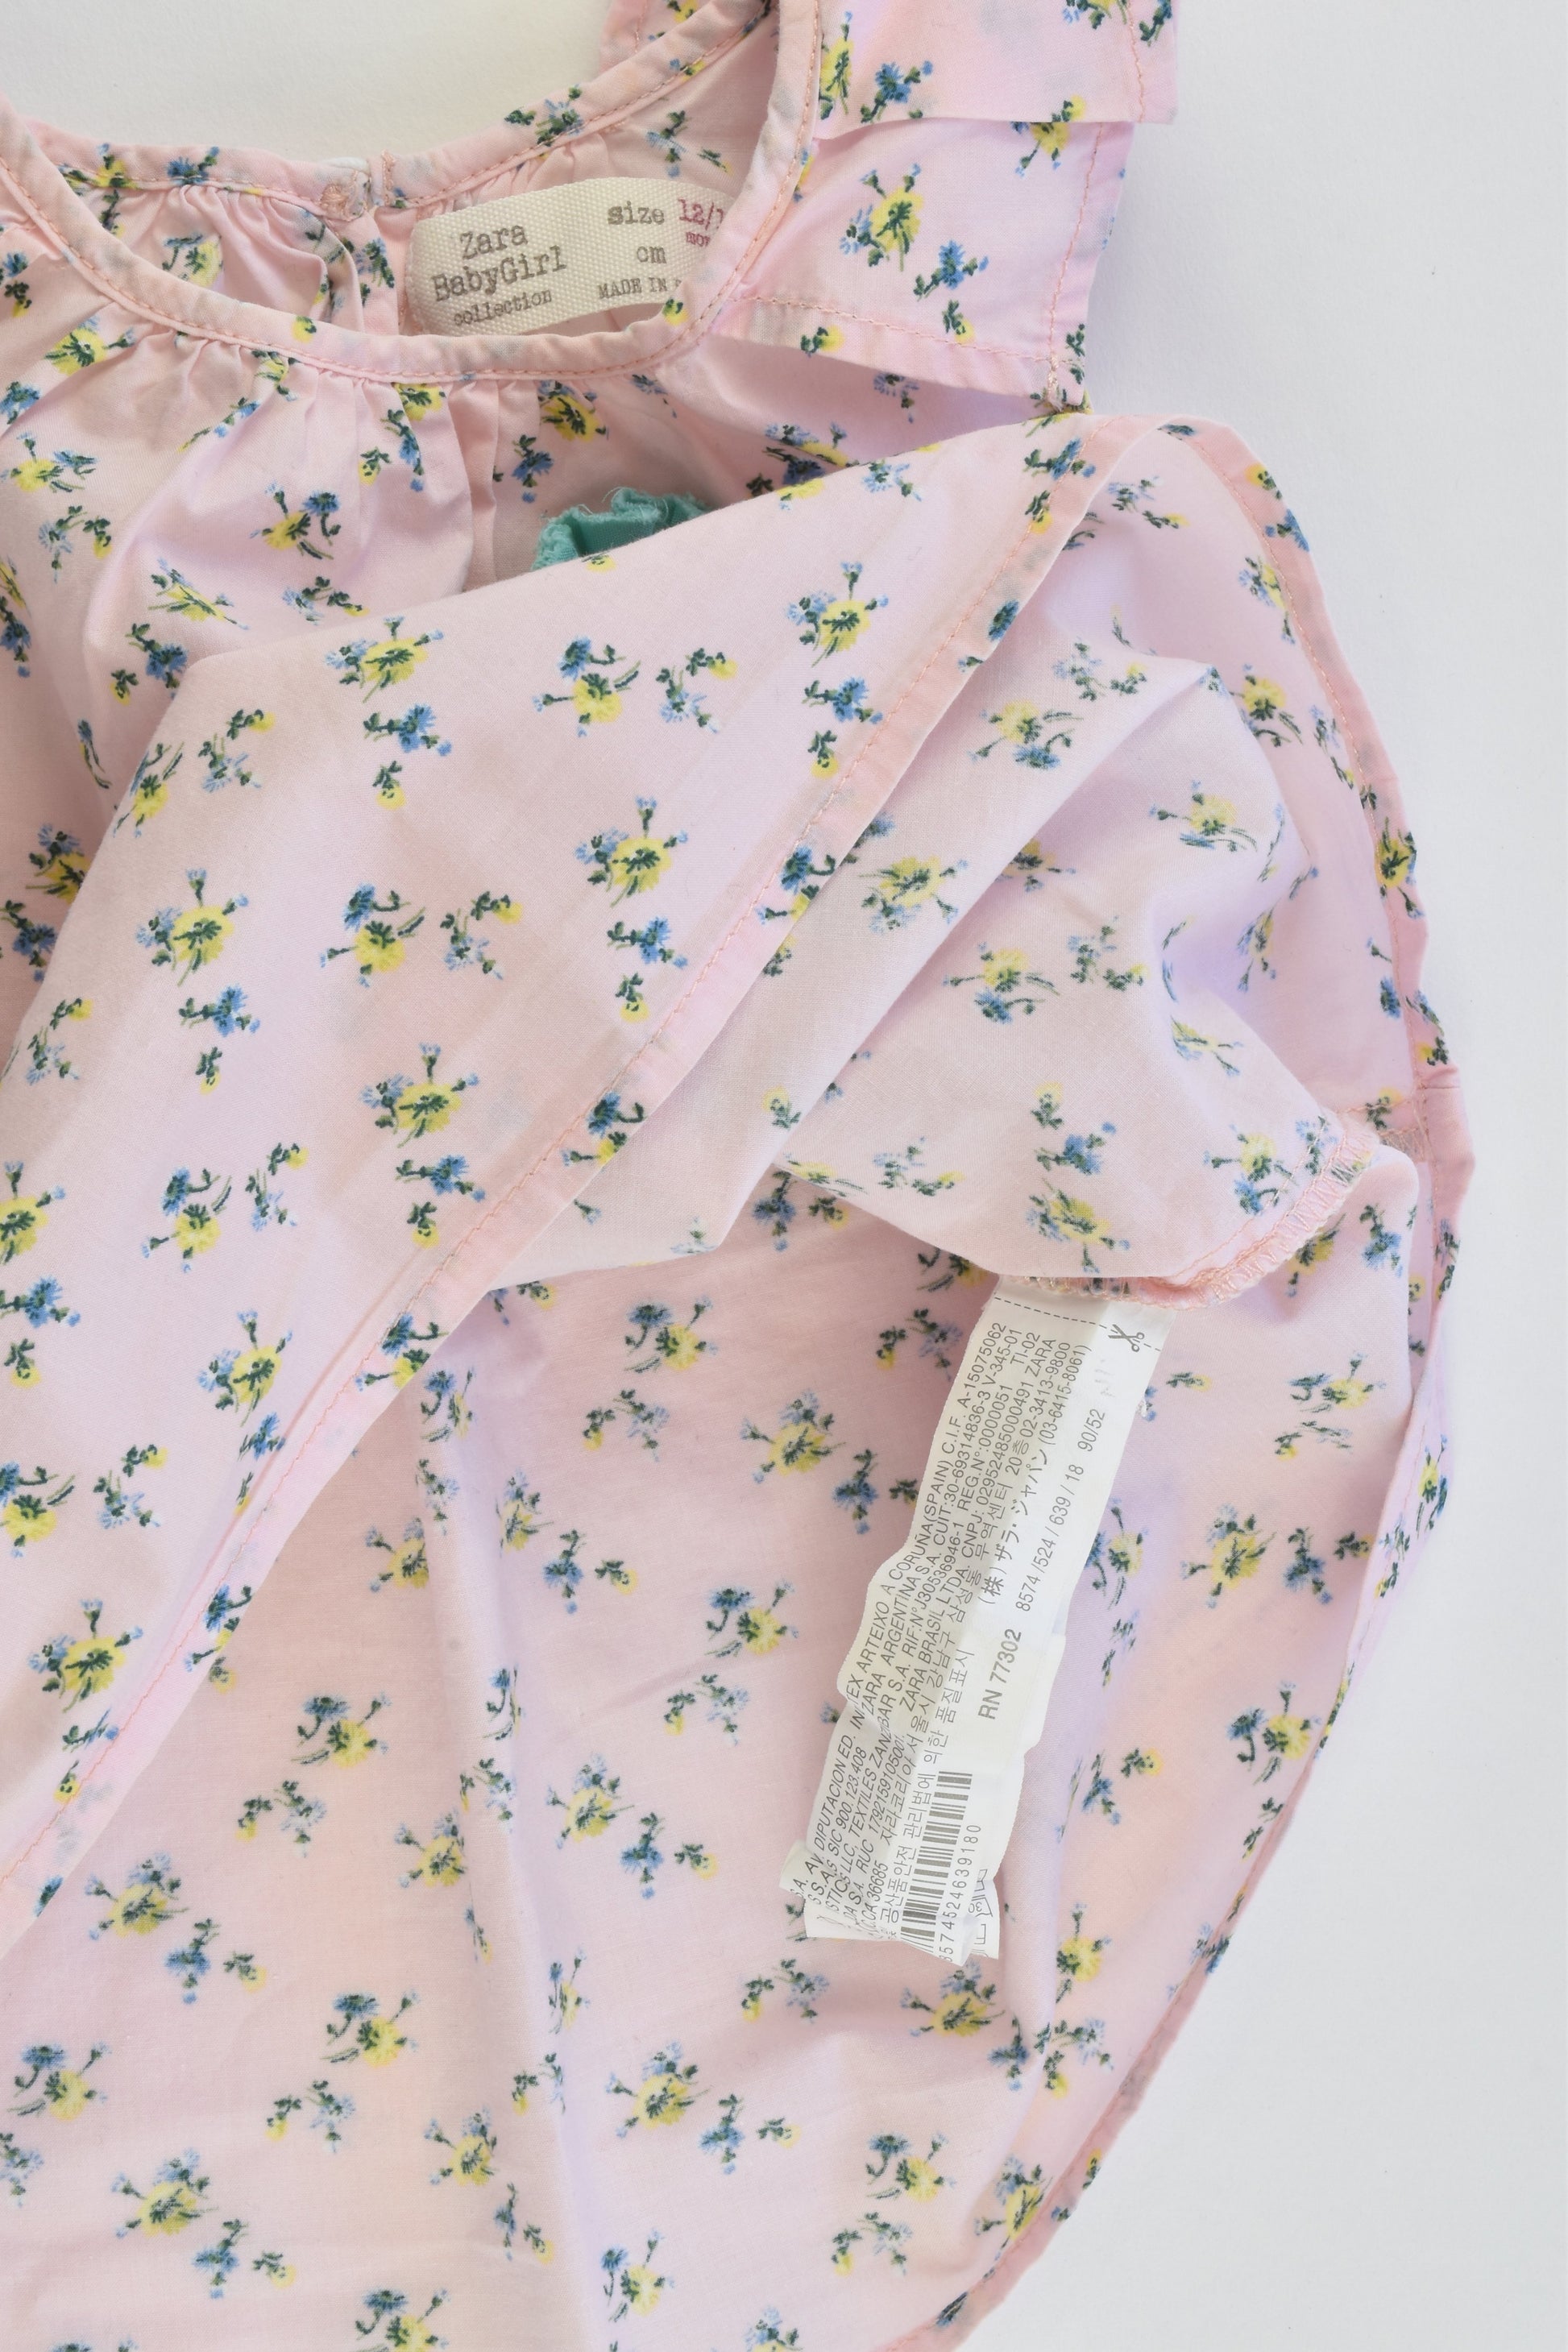 Zara Size 12/18 months (86 cm) Floral Blouse